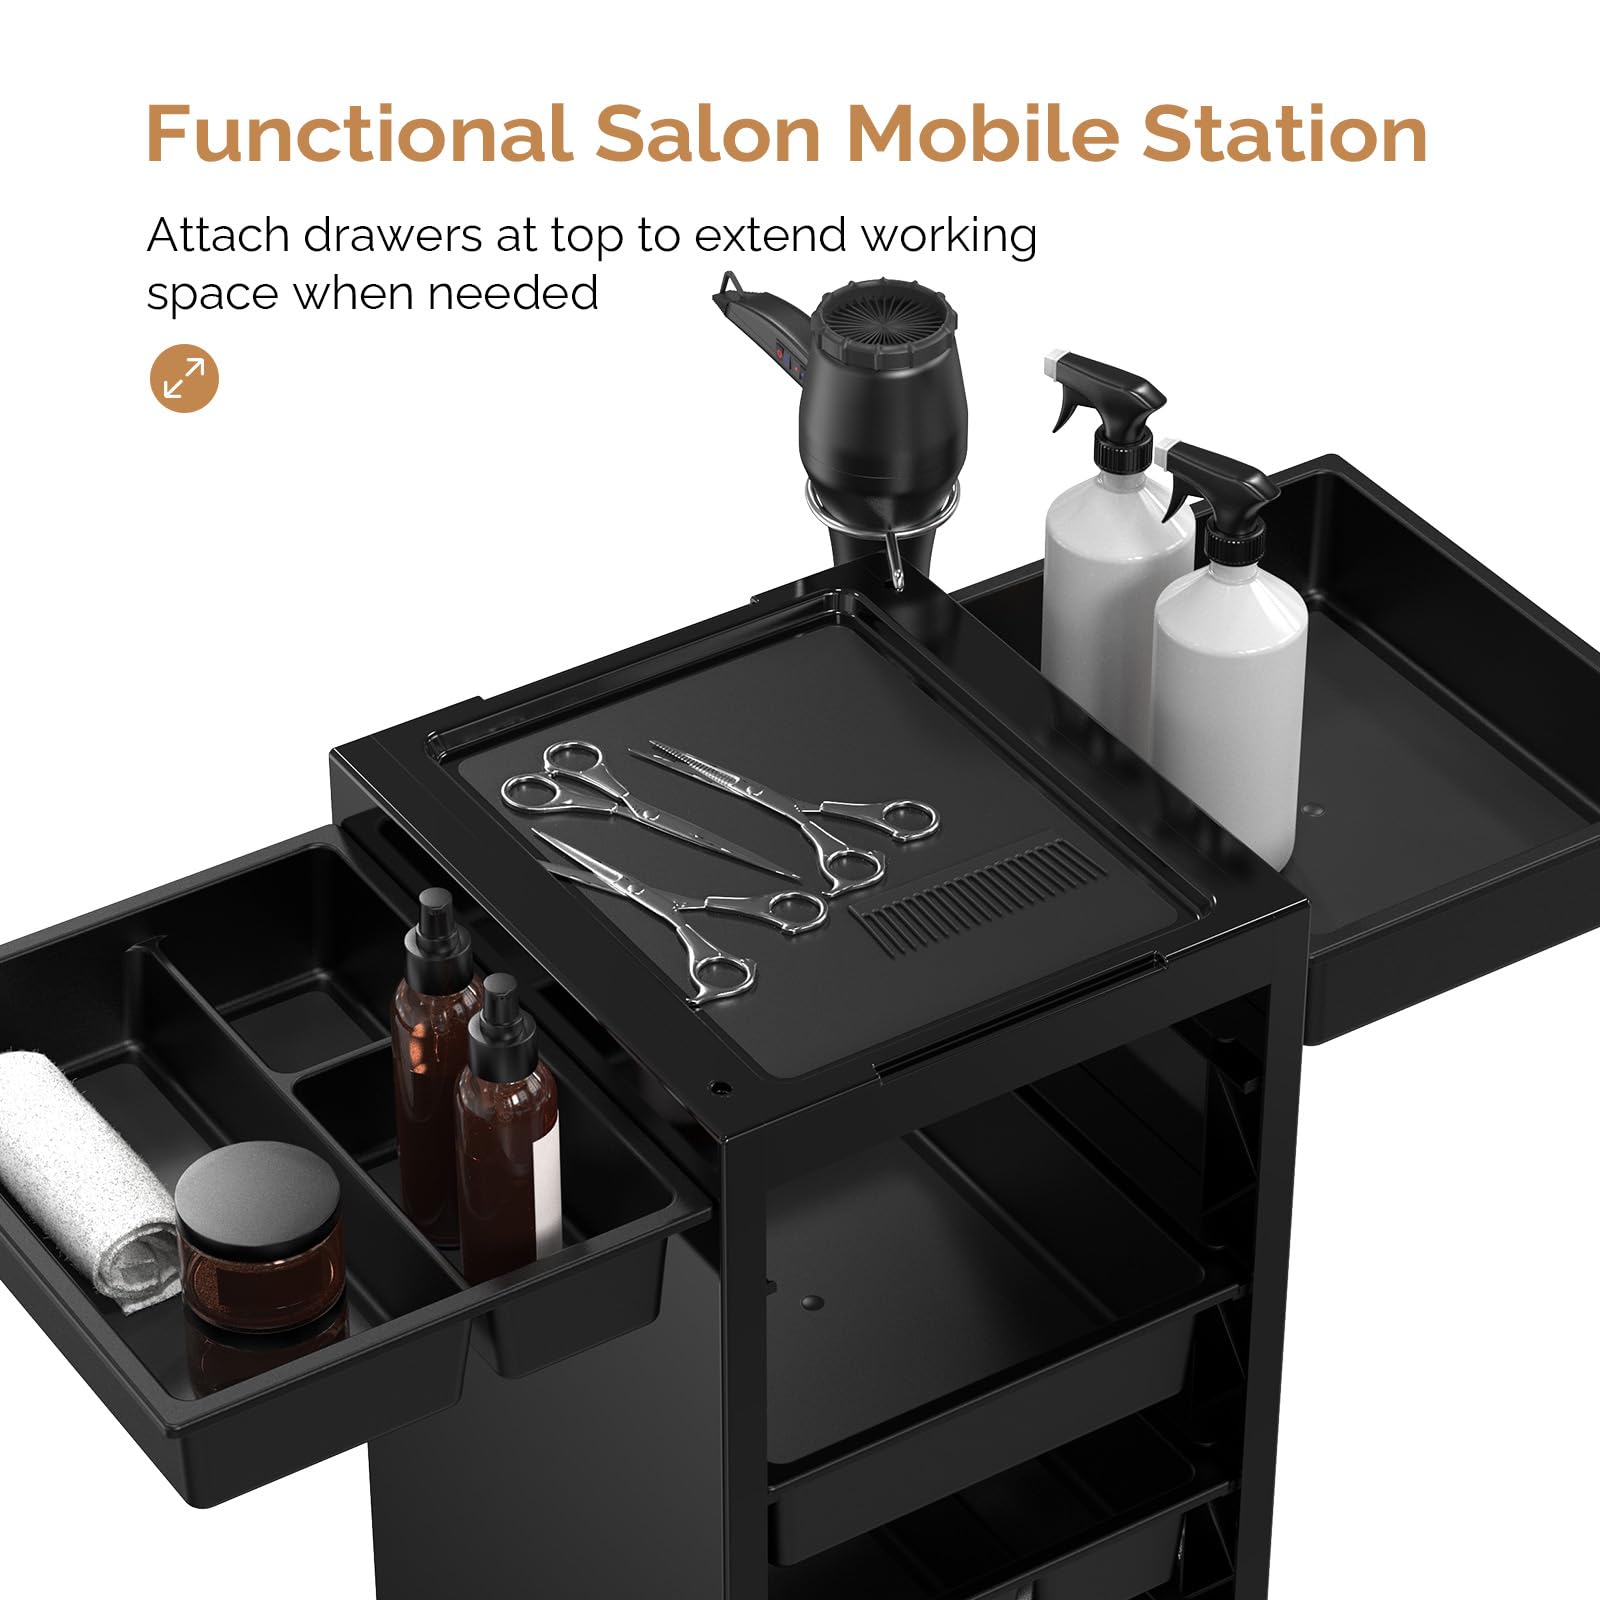 OmySalon Rolling Salon Trolley Cart w/Wheels & 6 Drawers Hair Dryer Holders